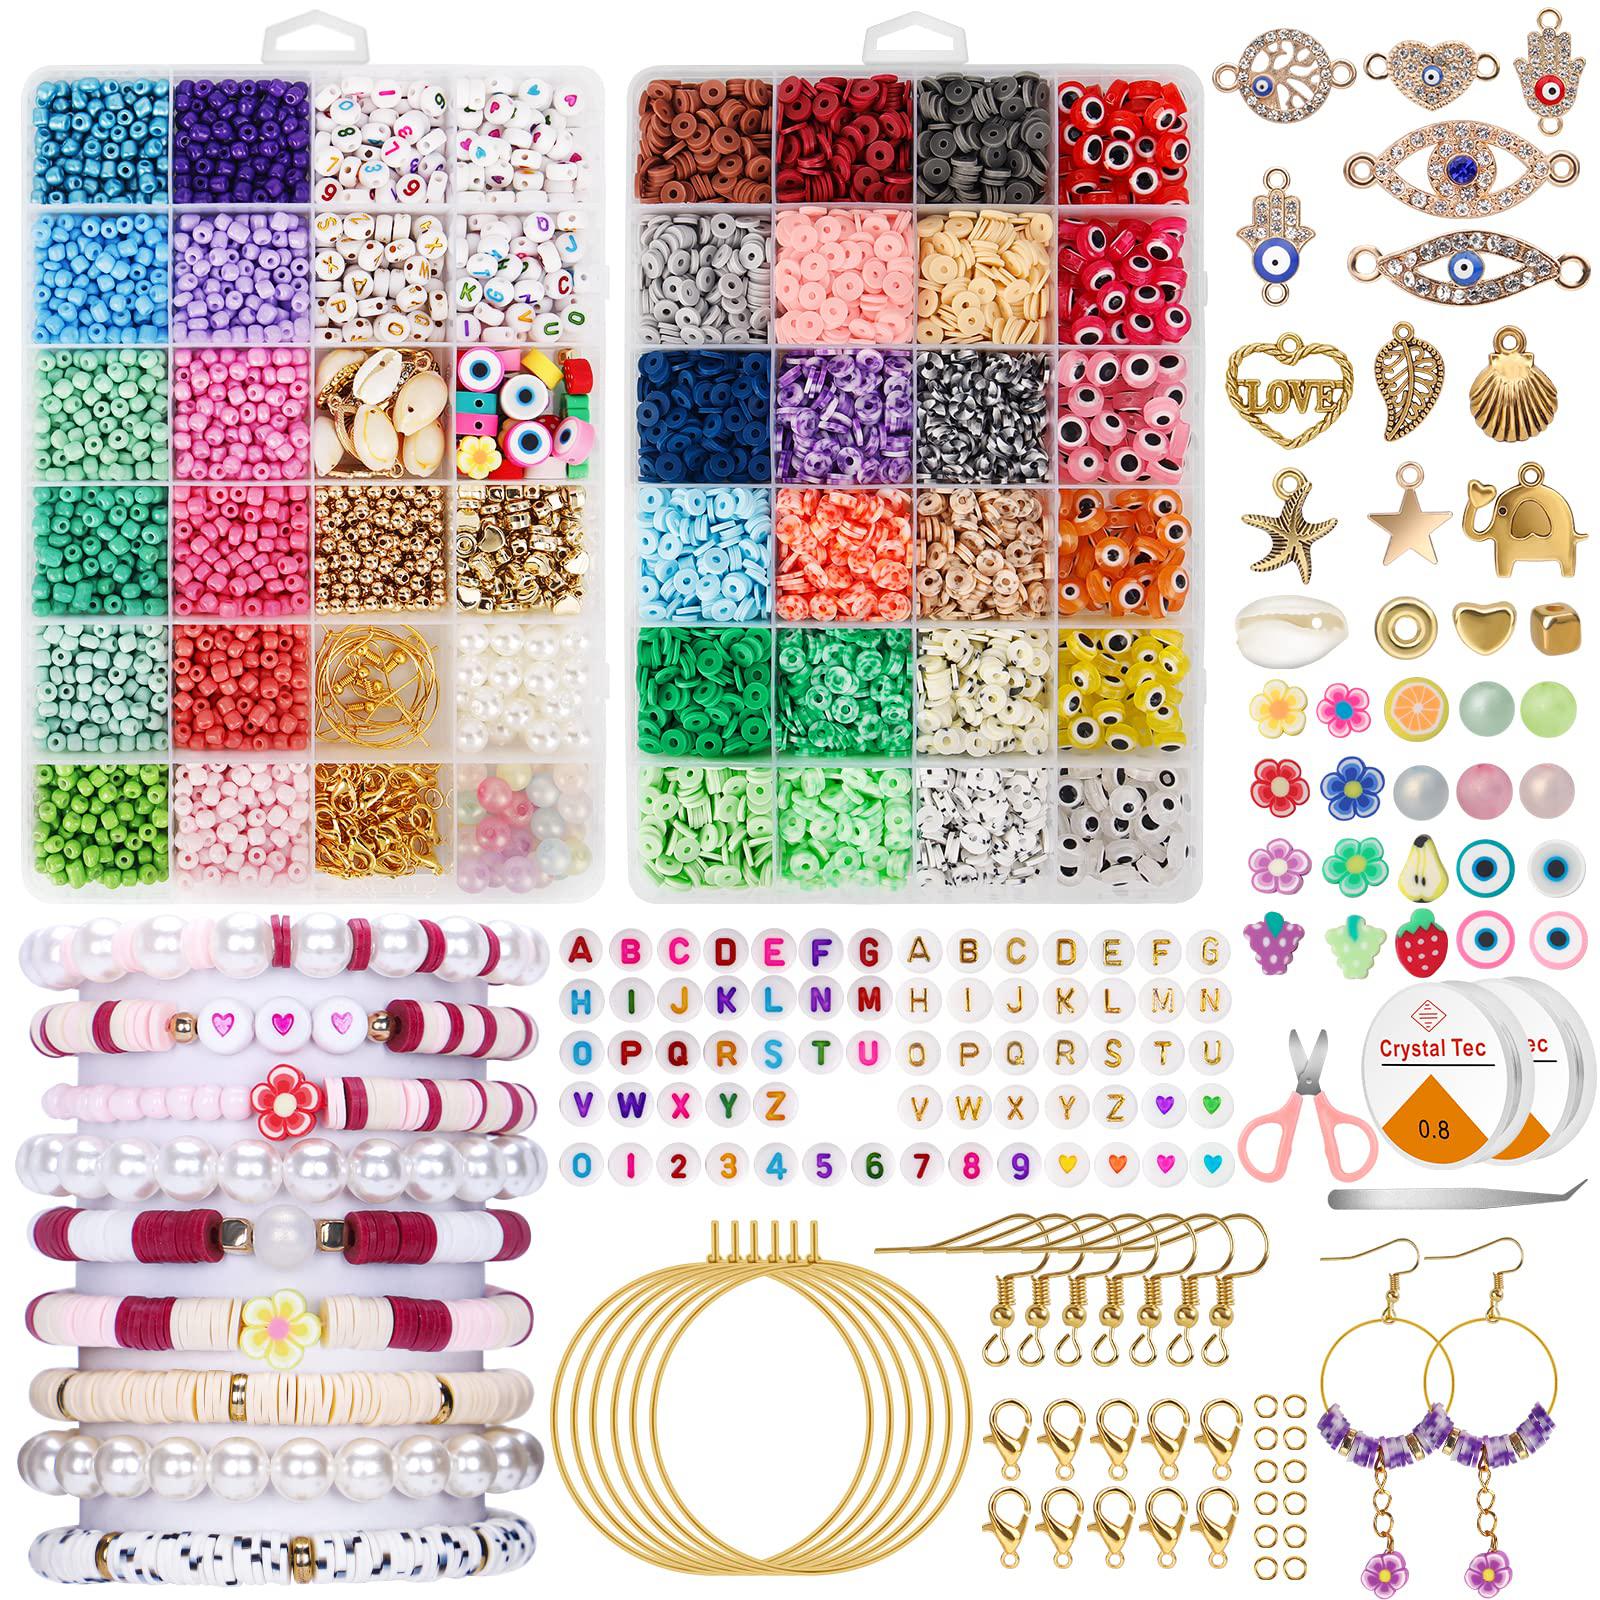 oiutuyd 7032pcs clay bead bracelet kit, 18 colors clay heishi